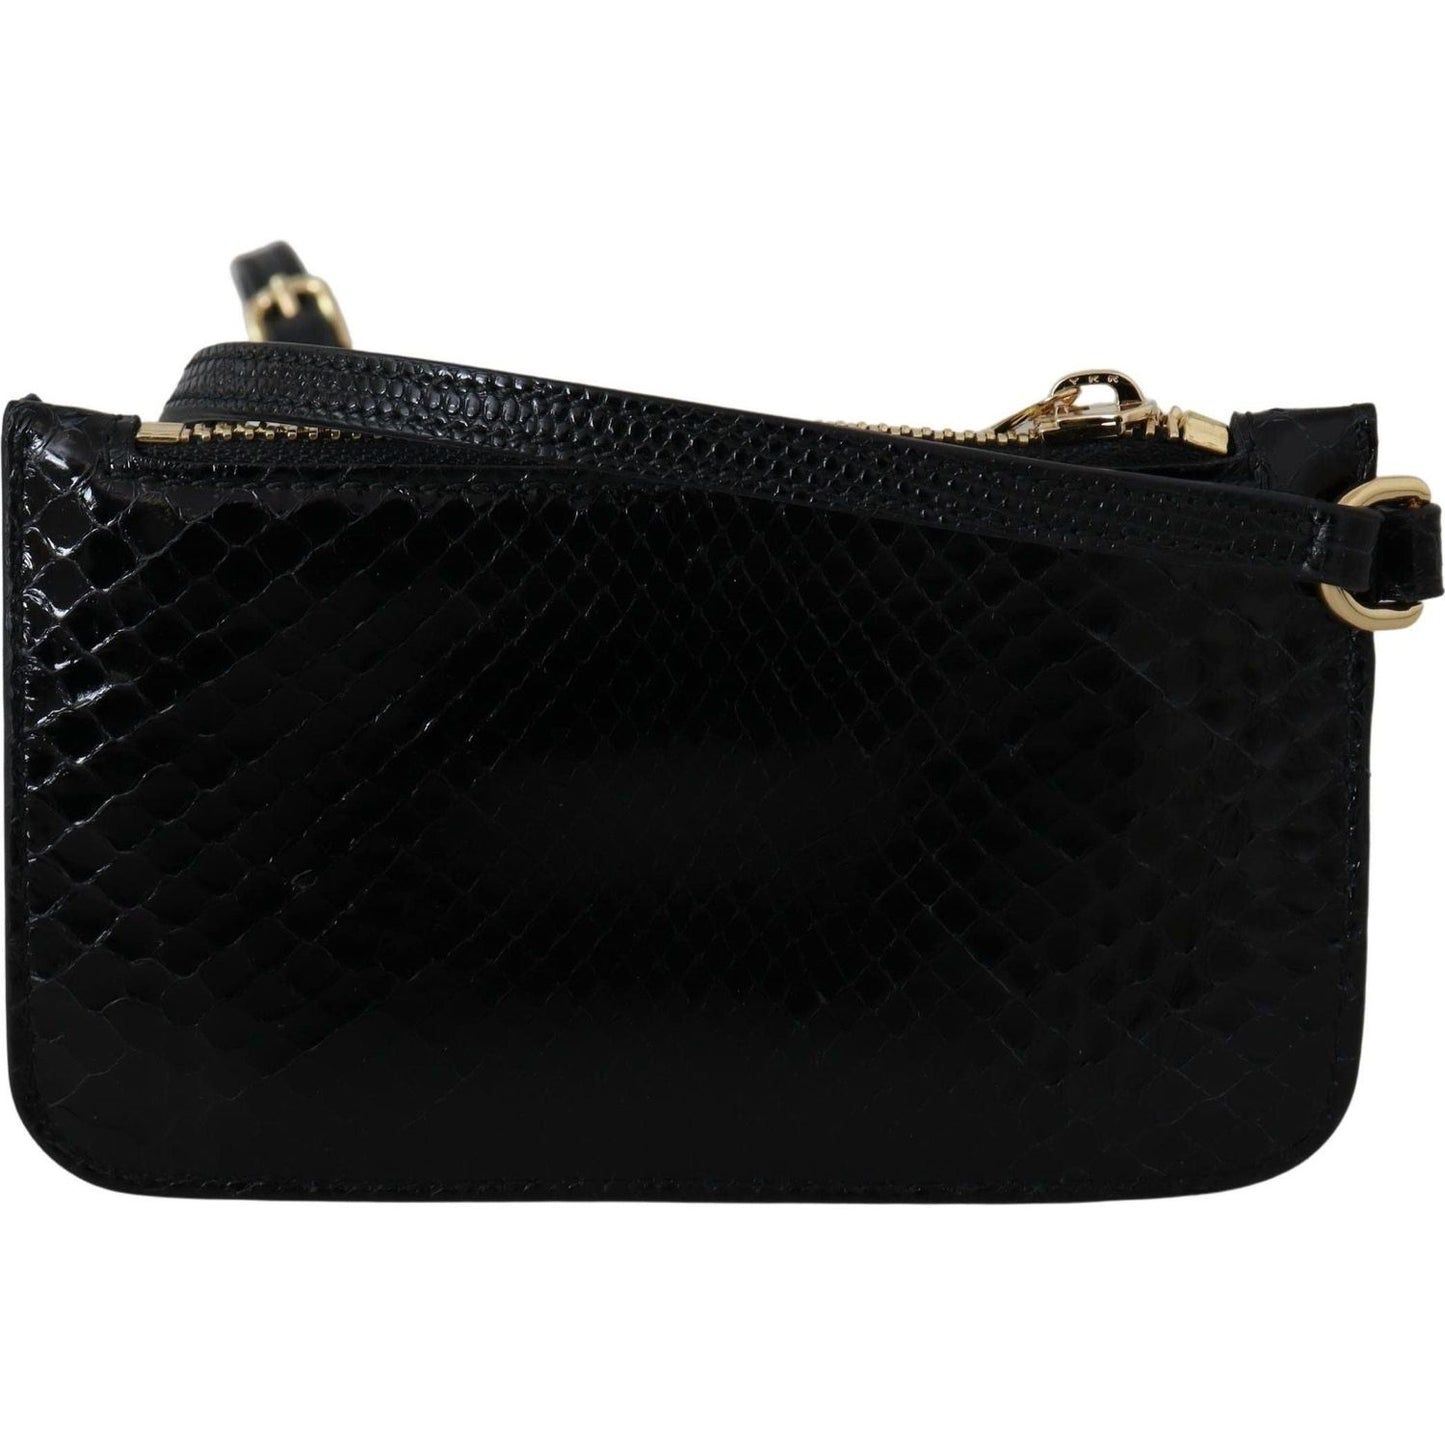 Dolce & Gabbana Elegant Python Pattern Leather Wristlet Wallet black-leather-coin-purse-wristlet-mirror-agnese-wallet